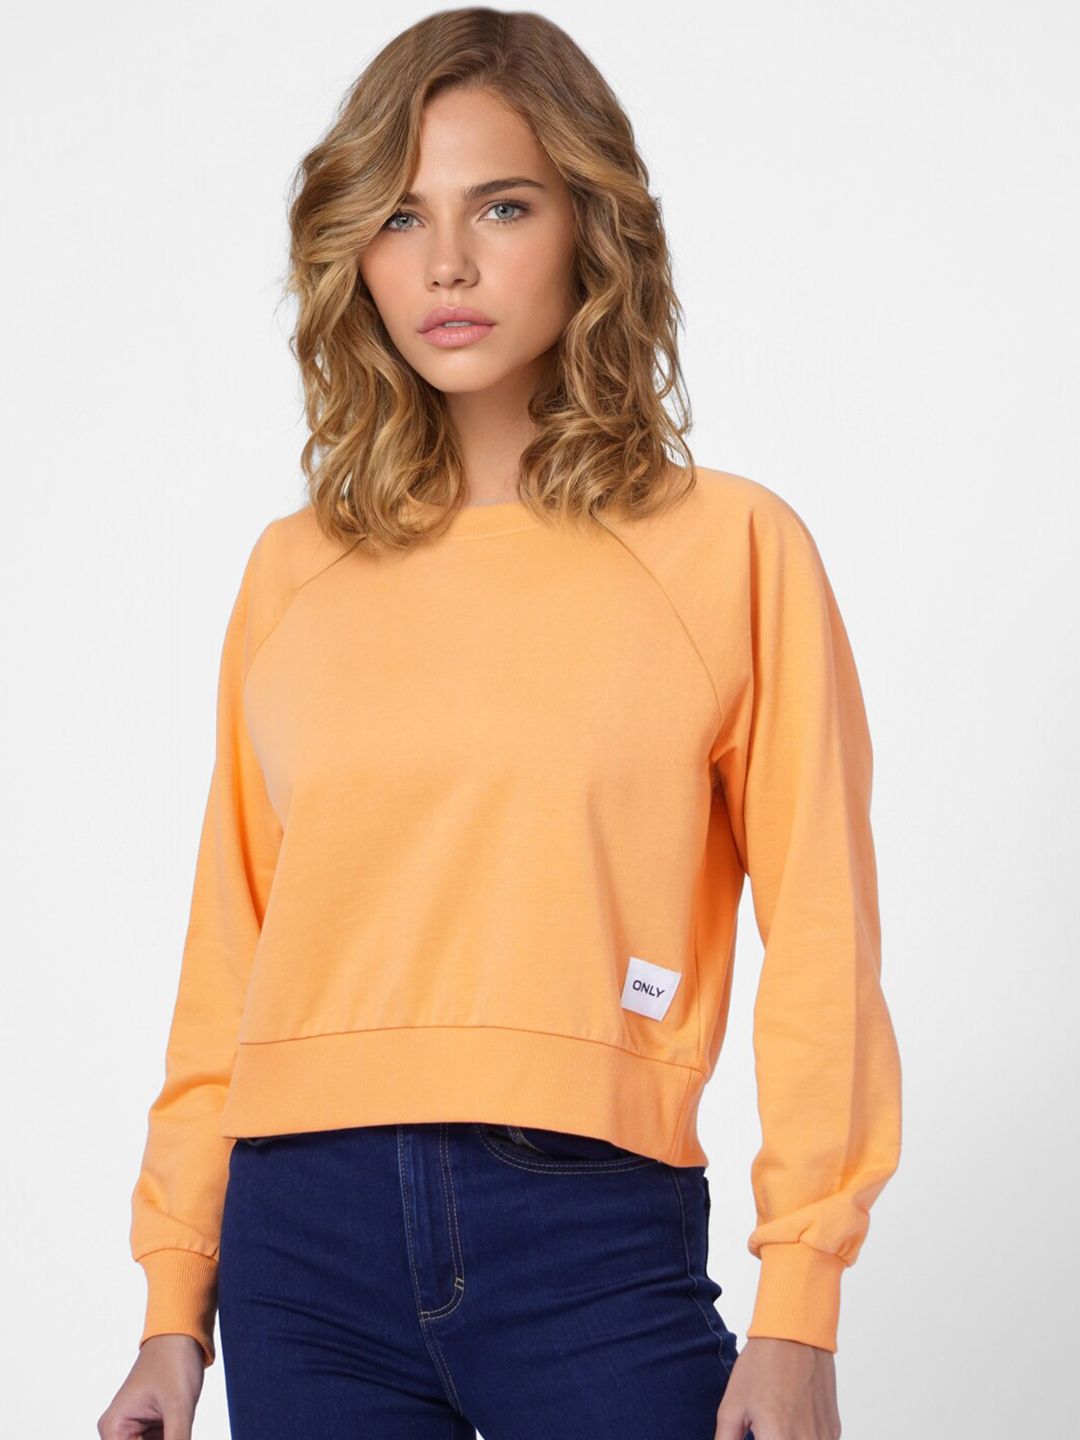 ONLY Women Orange Solid Sweatshirt Price in India